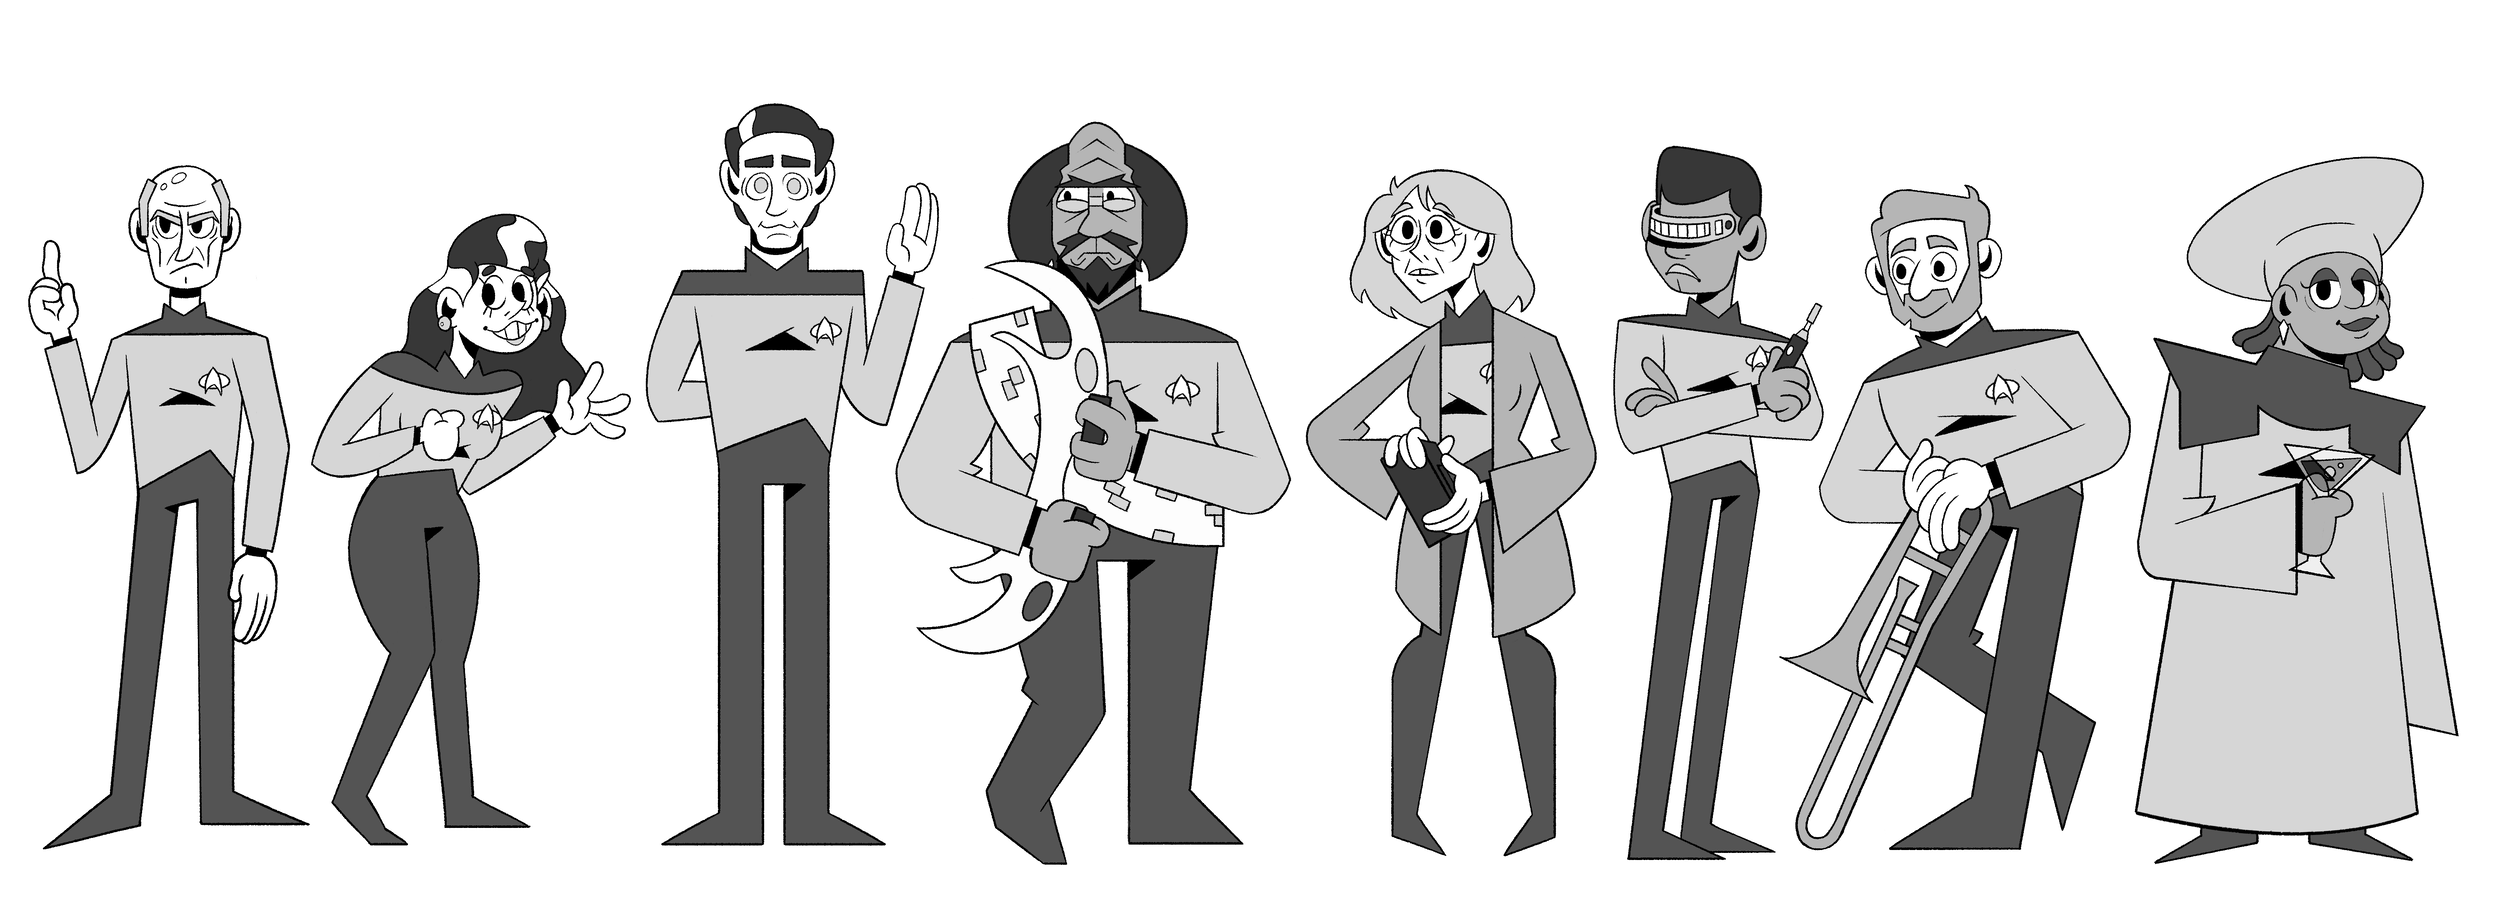 Star Trek: The Next Generation Cast Designs